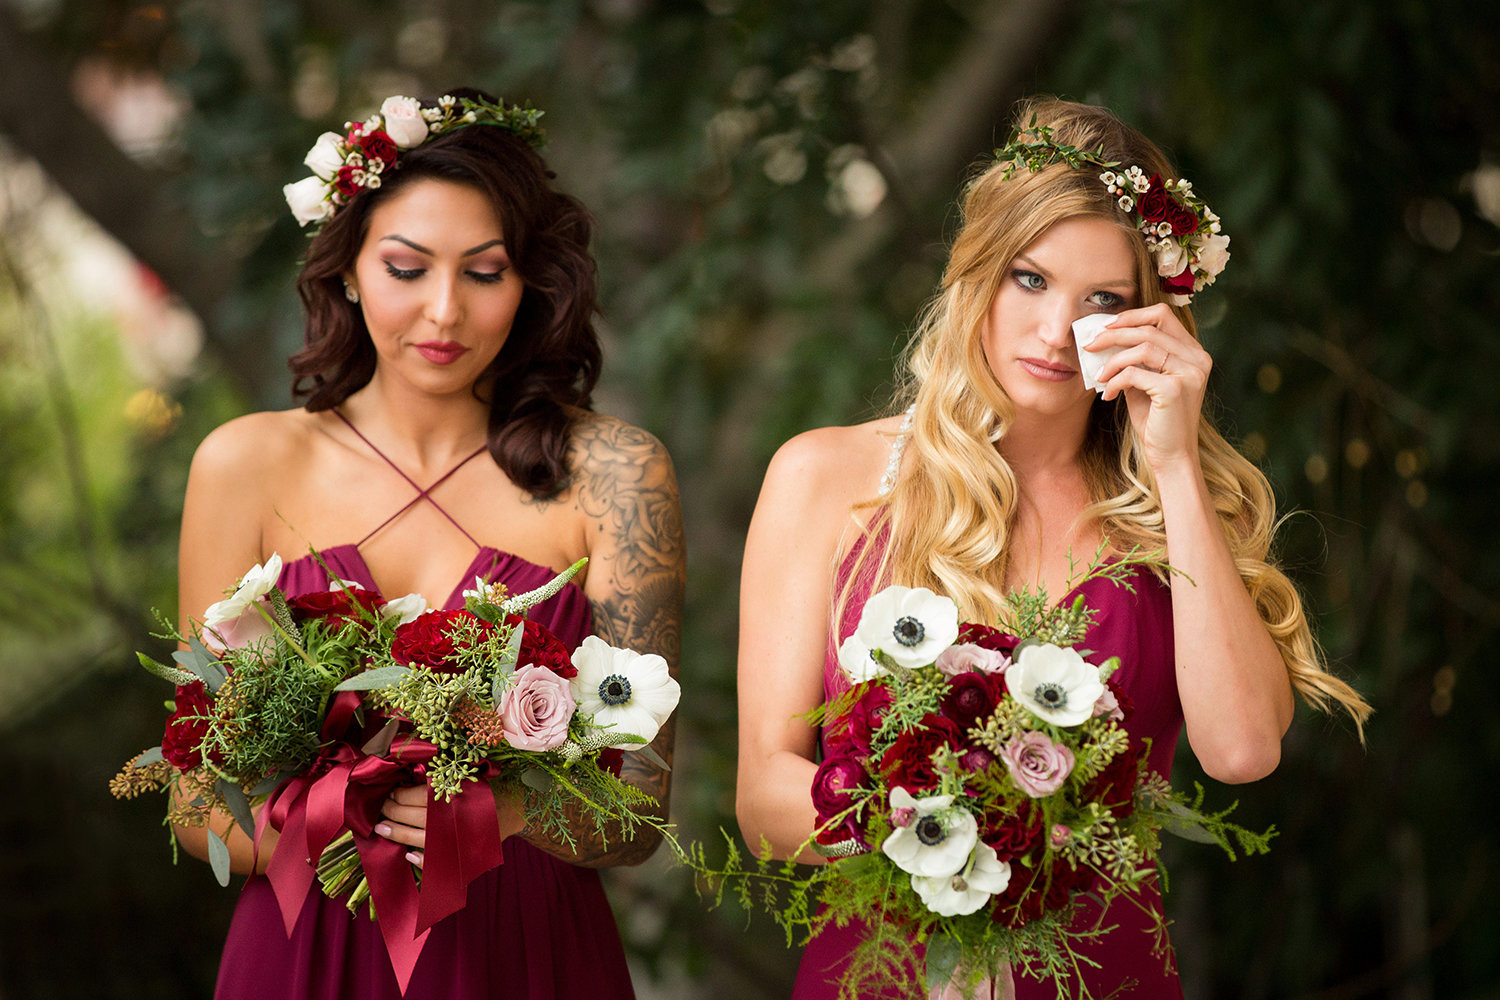 Green Gables wedding photos stunning ceremony with bridesmaid